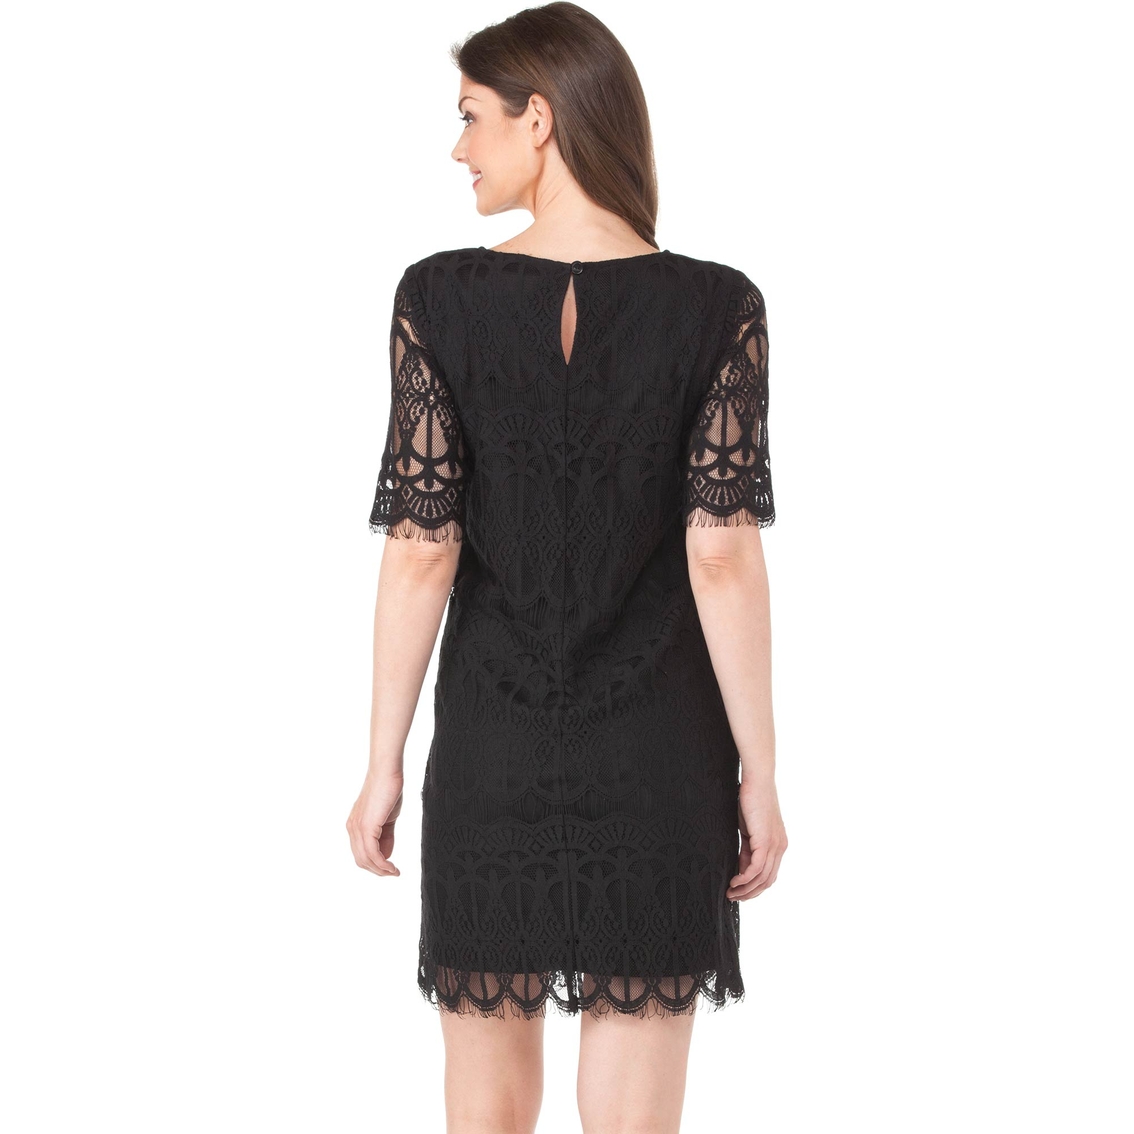 Ronni Nicole Antique Lace Shift Dress | Dresses | Clothing ...